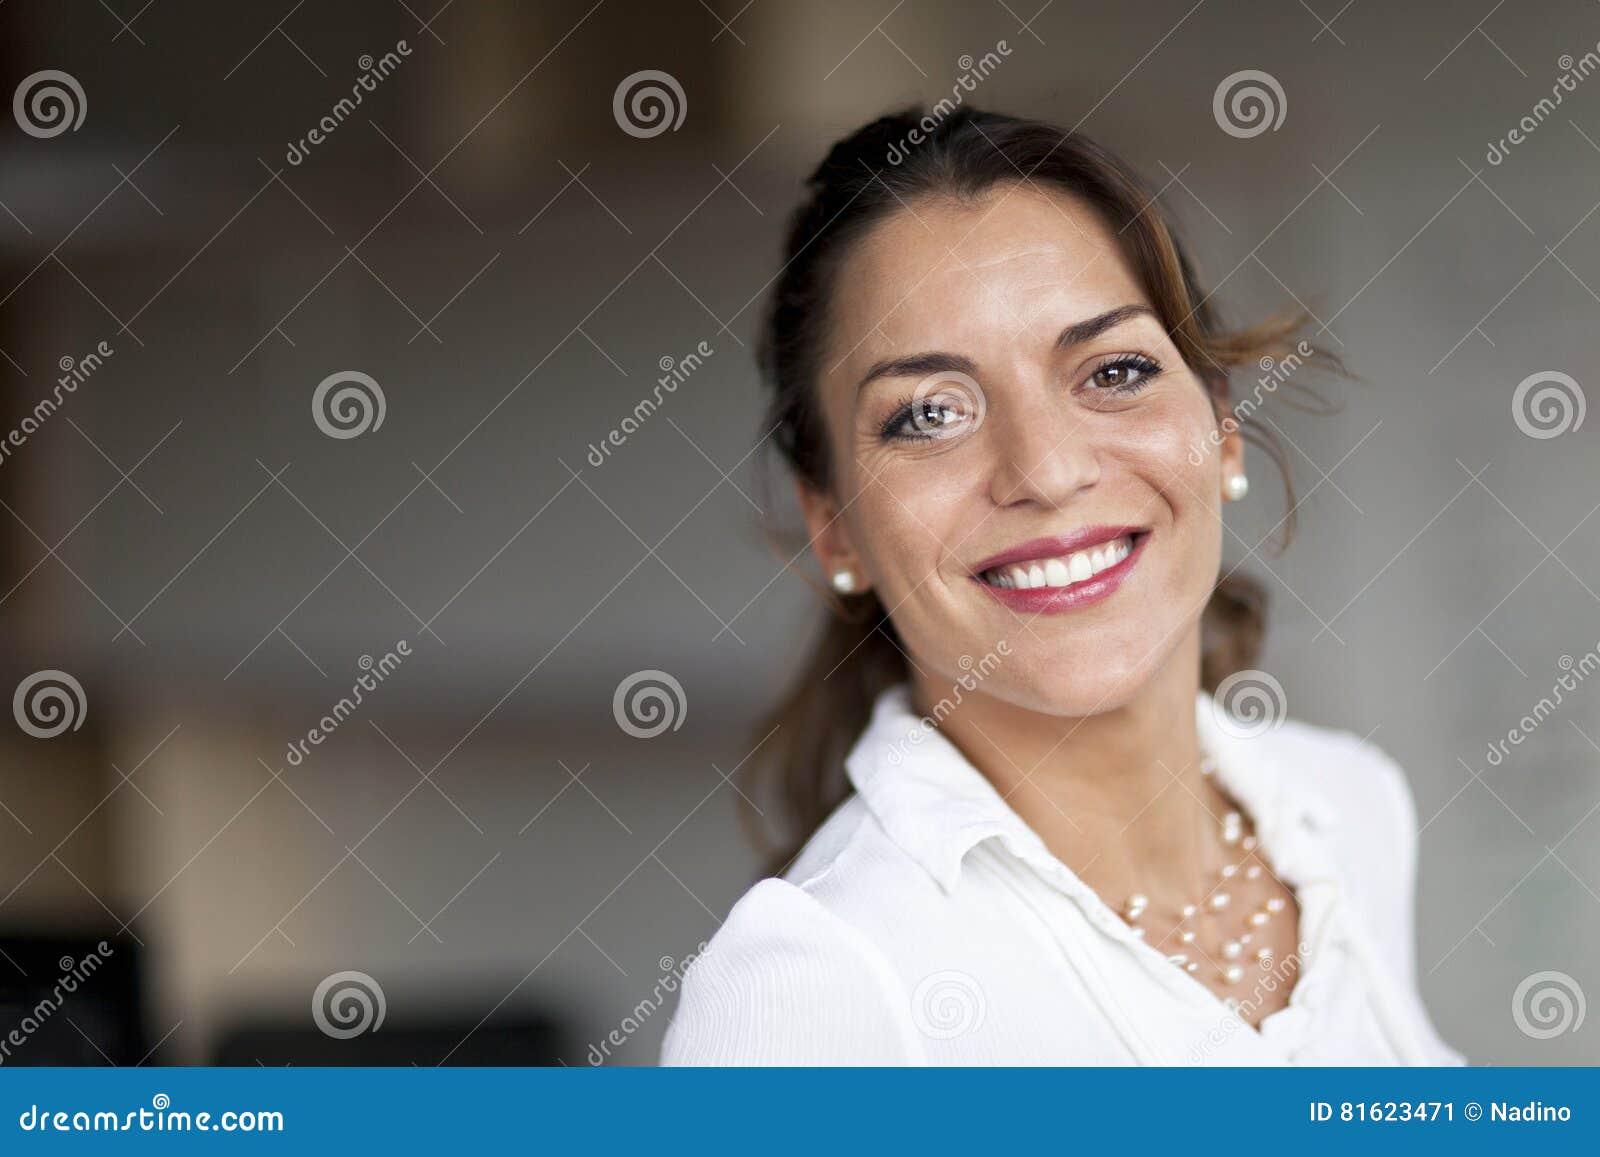 spanish woman smiling at the camera